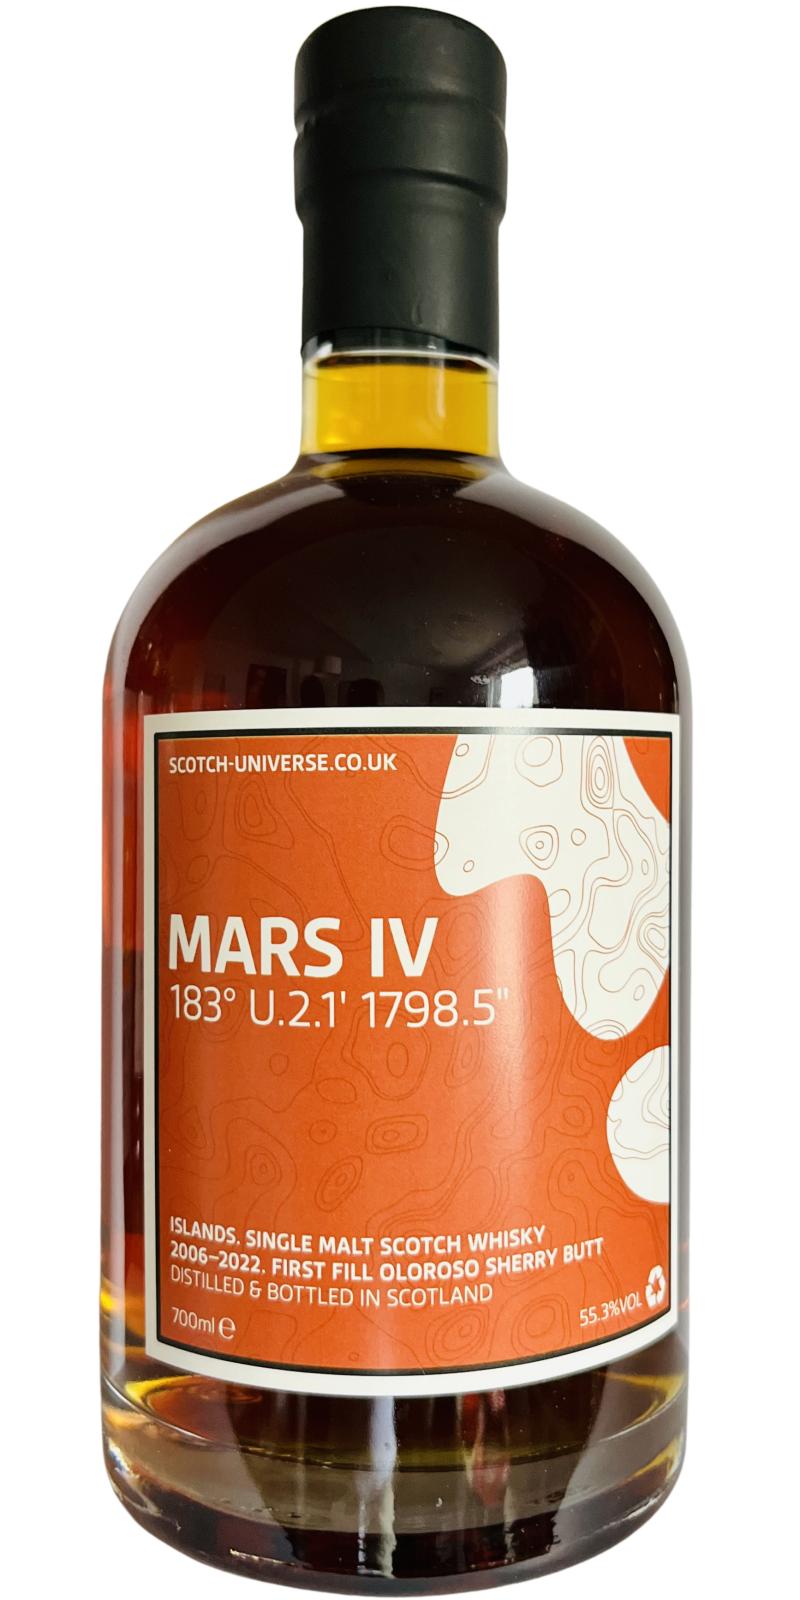 Scotch Universe Mars IV - 183° U.2.1' 1798.5"